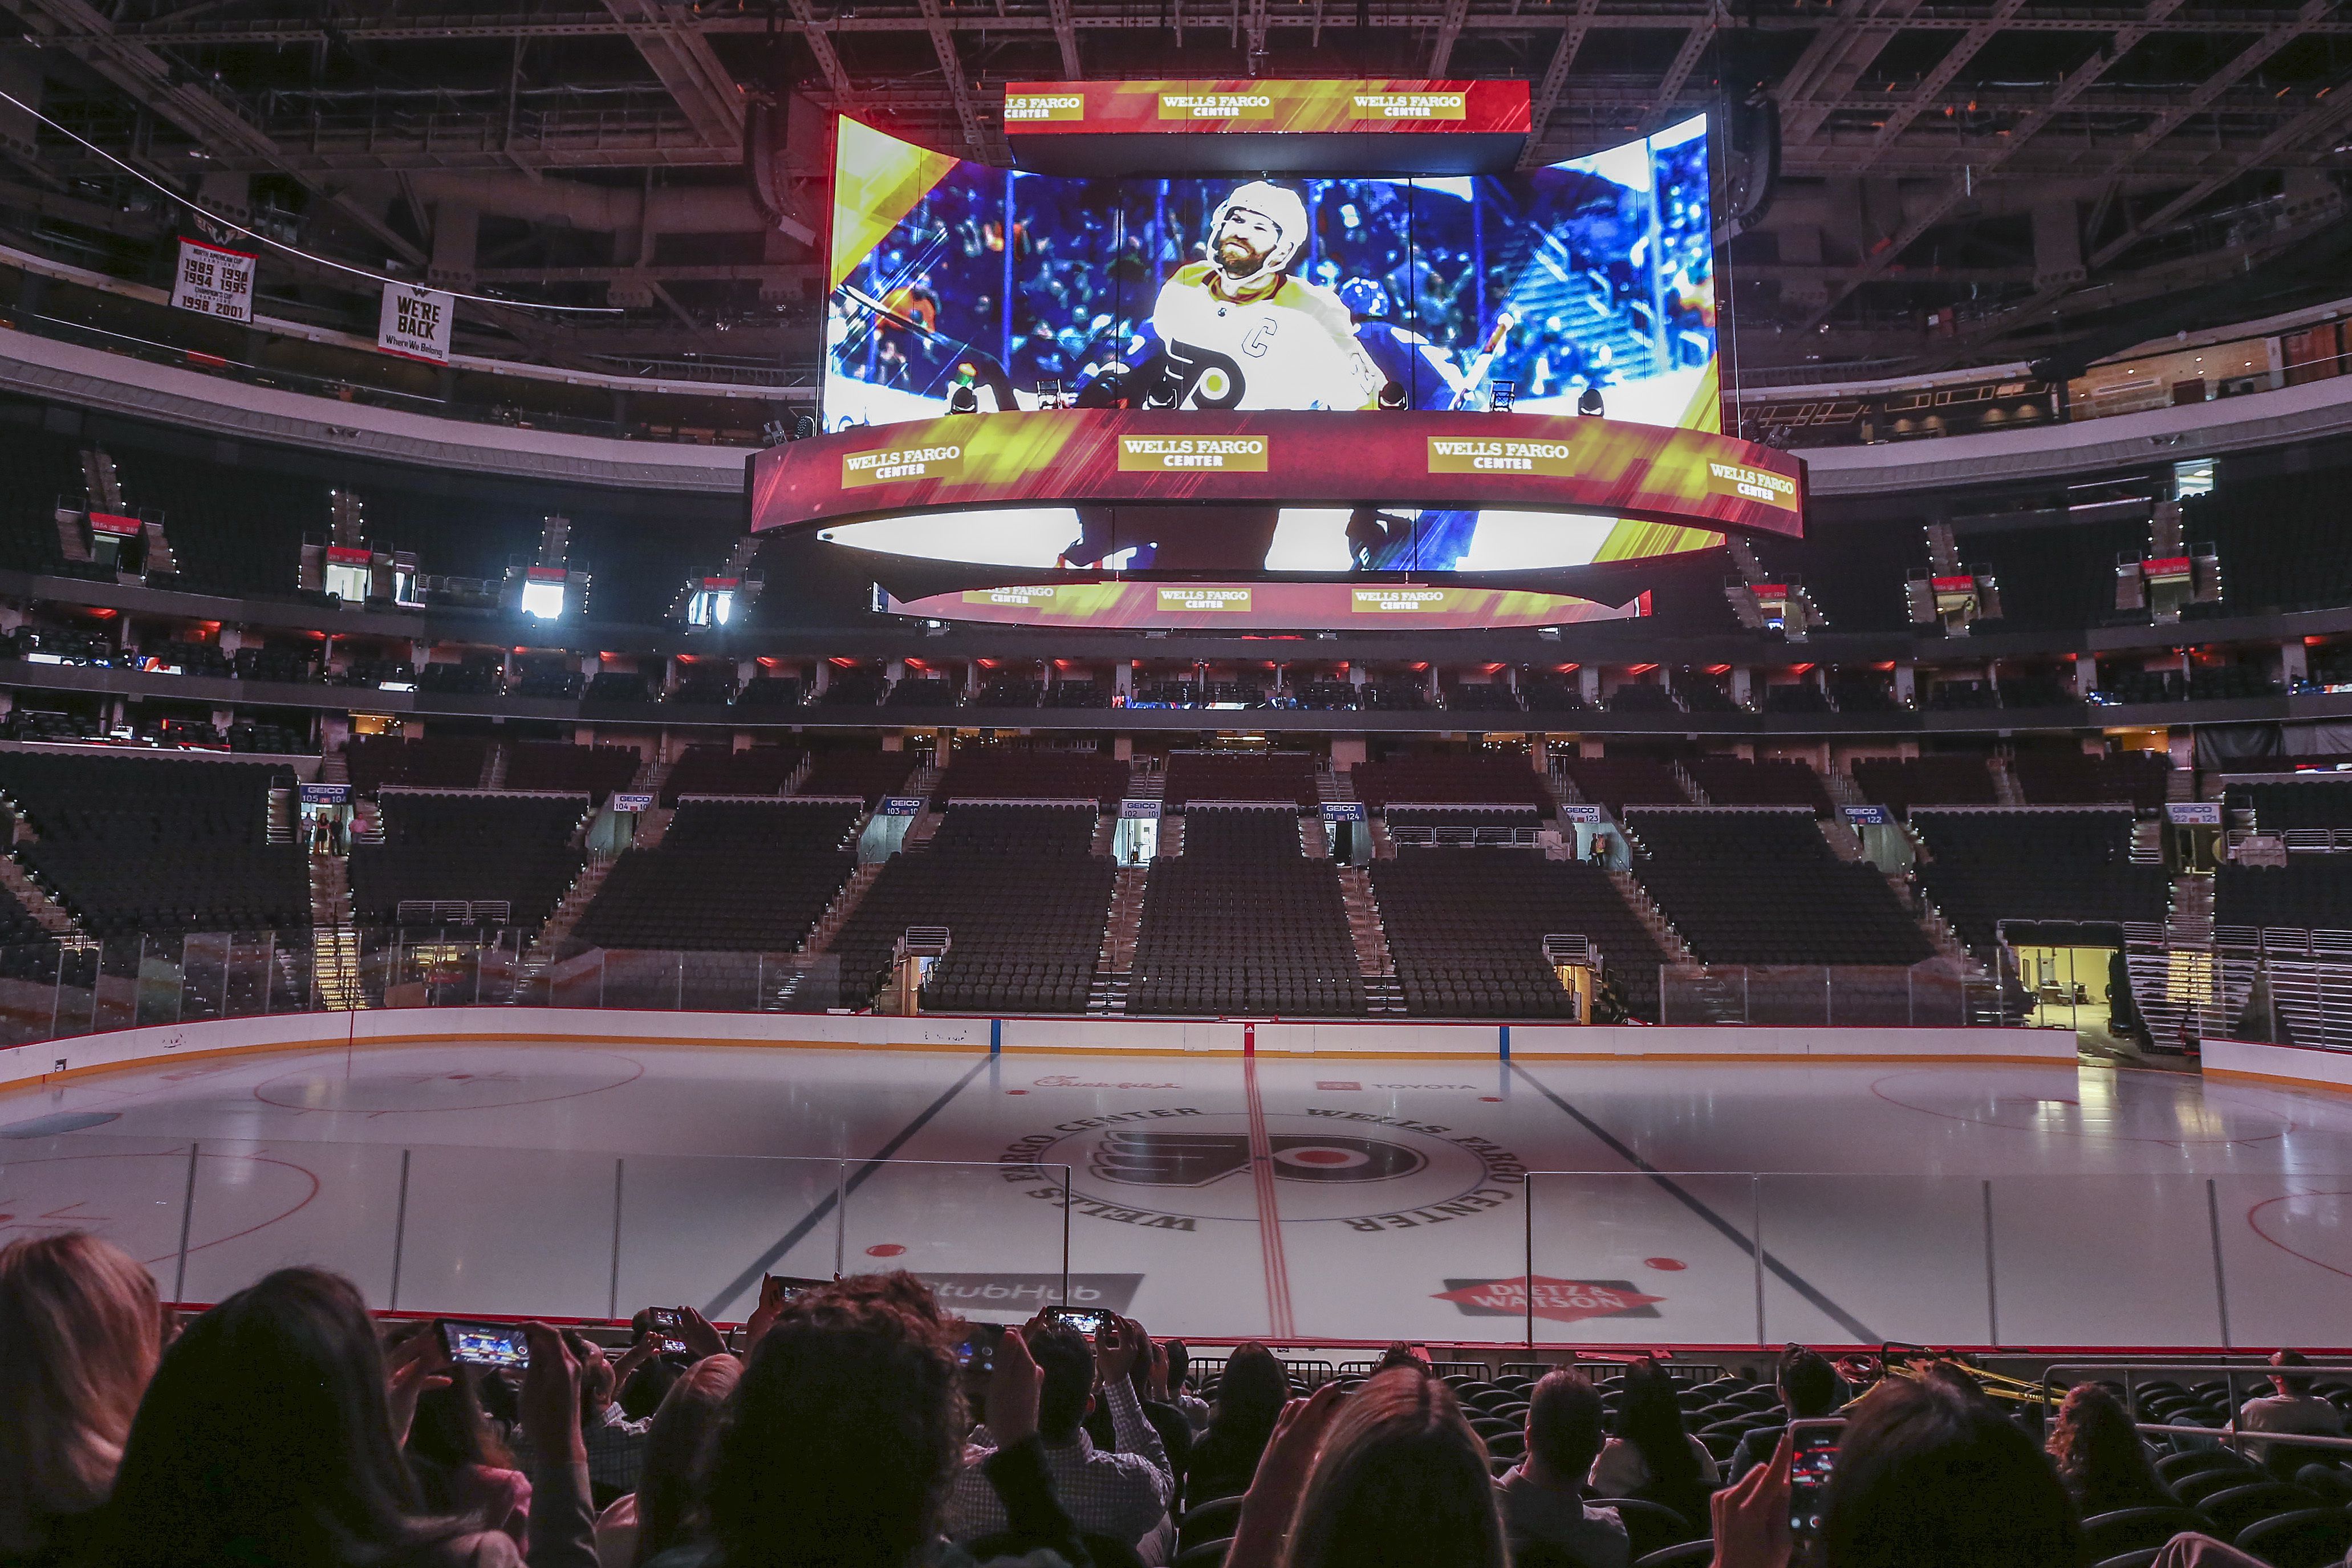 Wells Fargo Center to add 3 'massive' LED screens to arena's exterior -  Philadelphia Business Journal